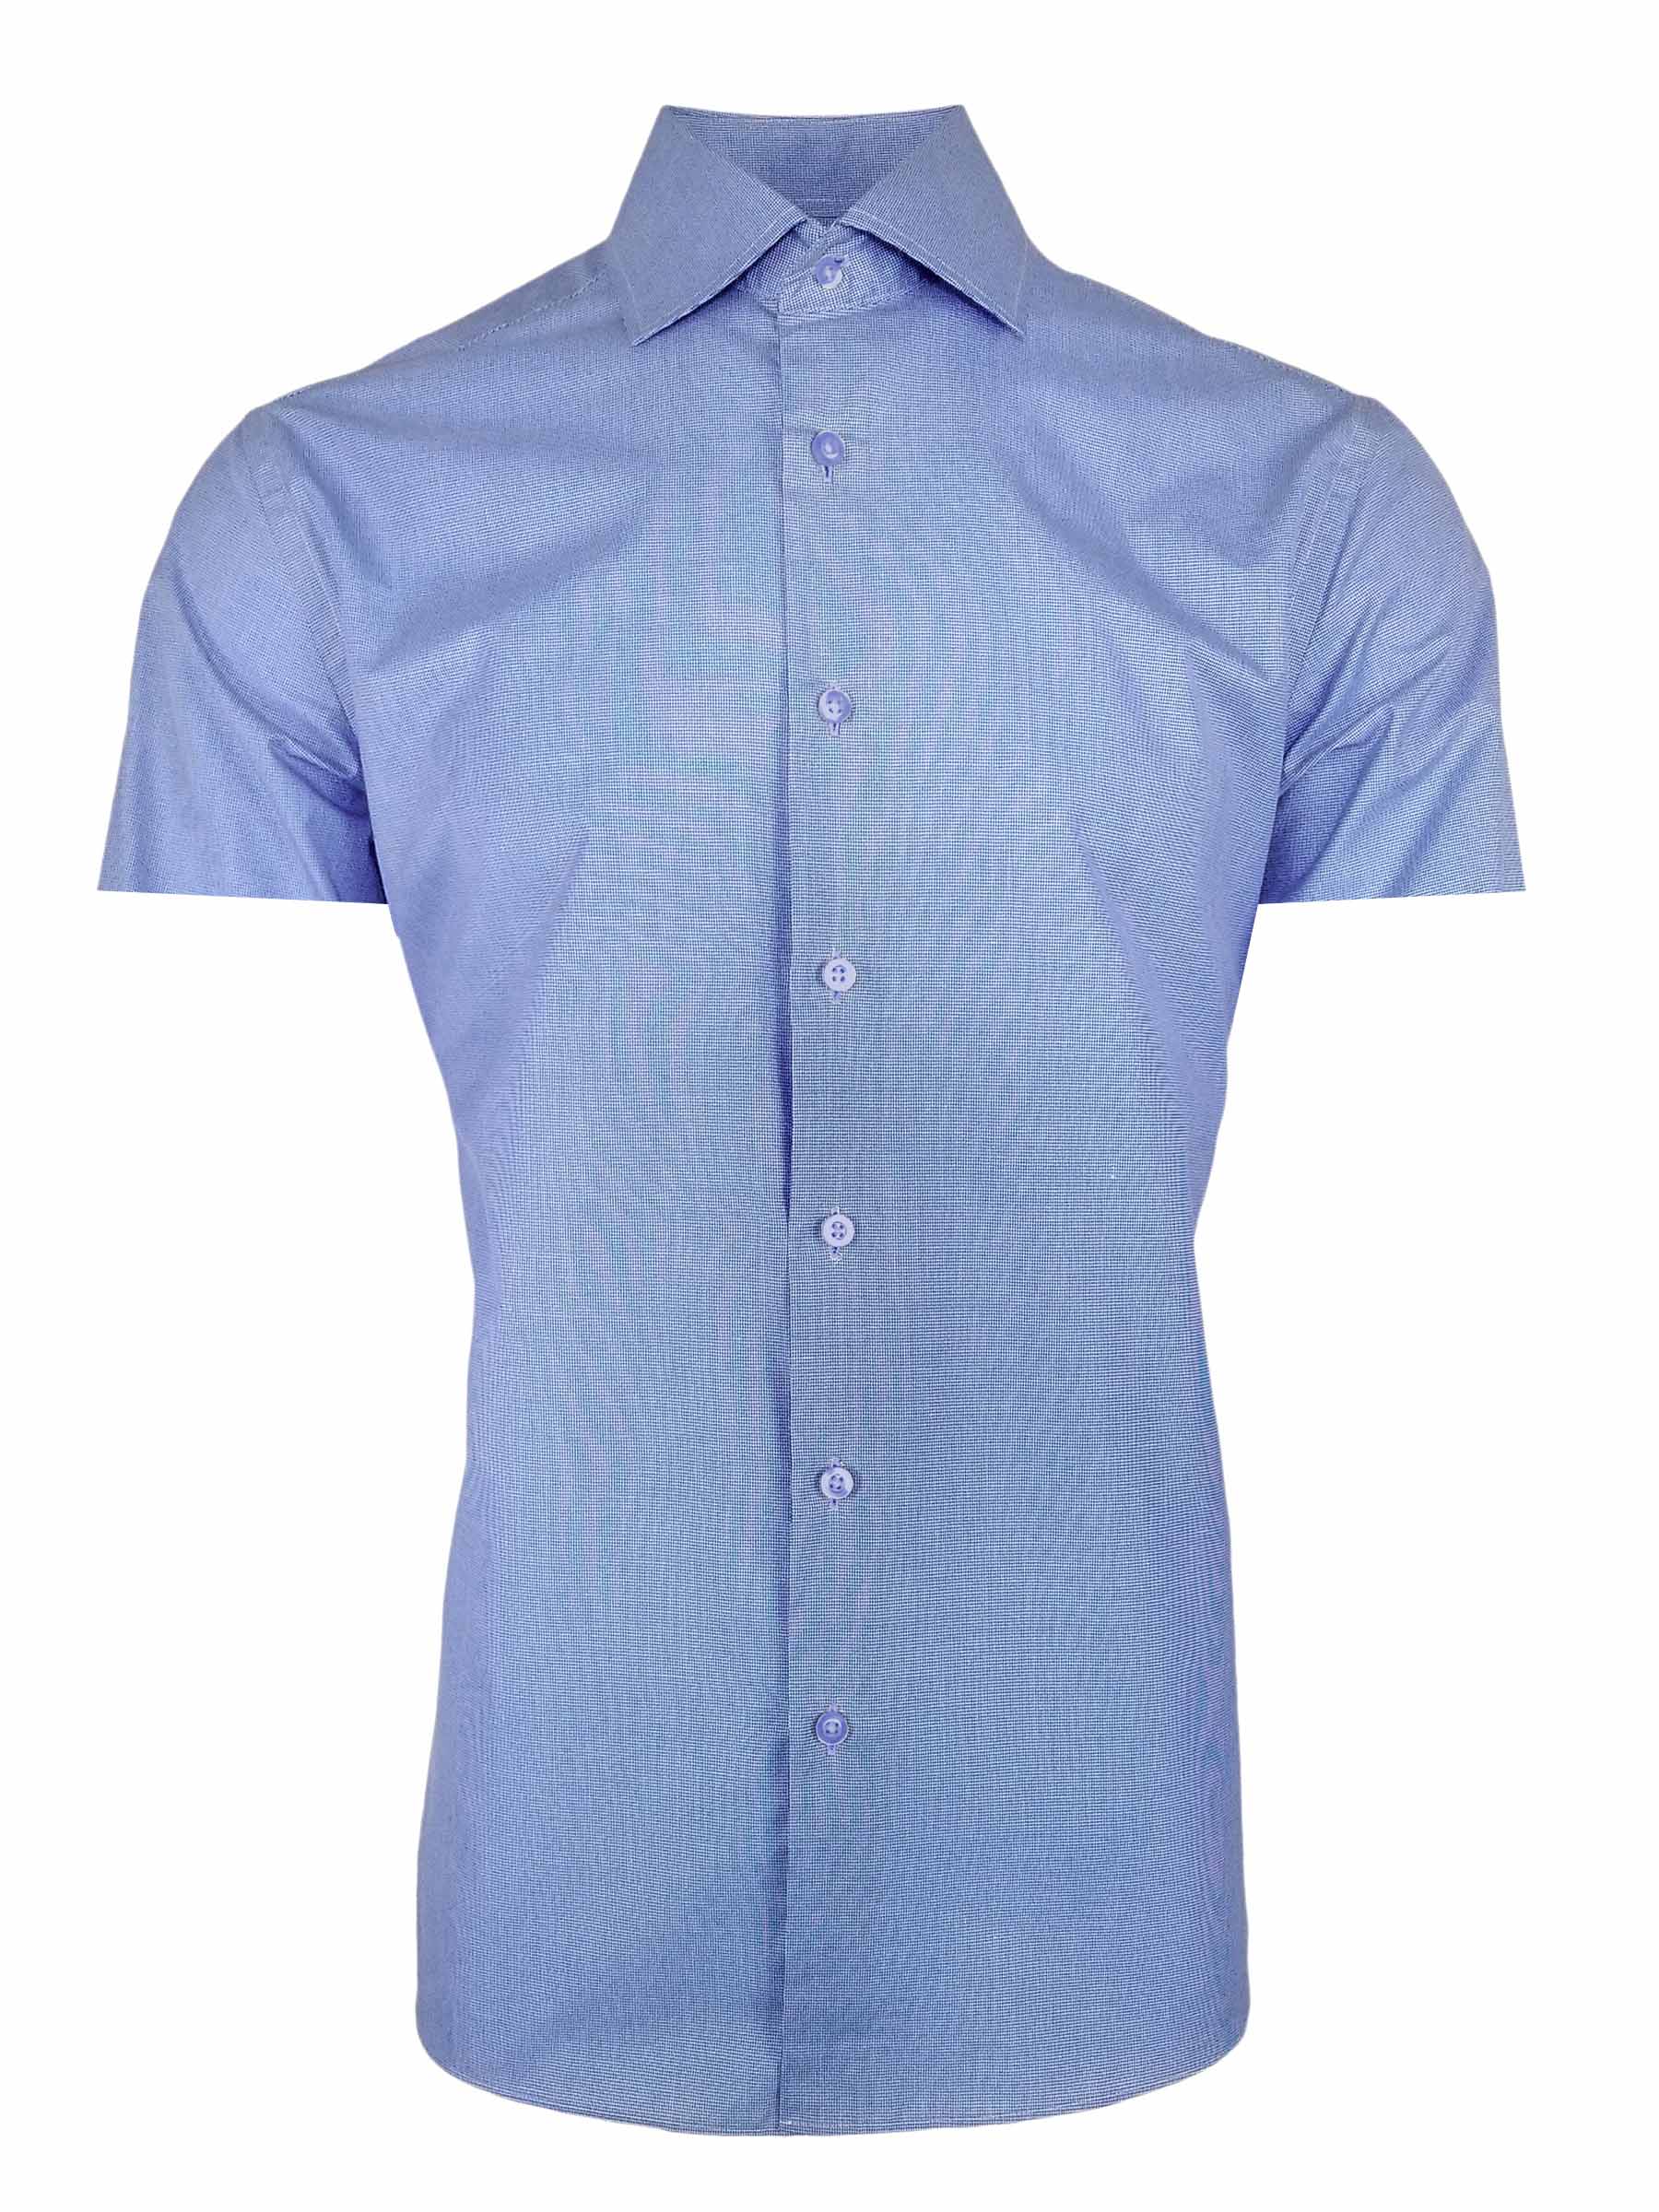 Men's Paris Shirt - Light Blue Micro Check Long Sleeve | Uniform Edit